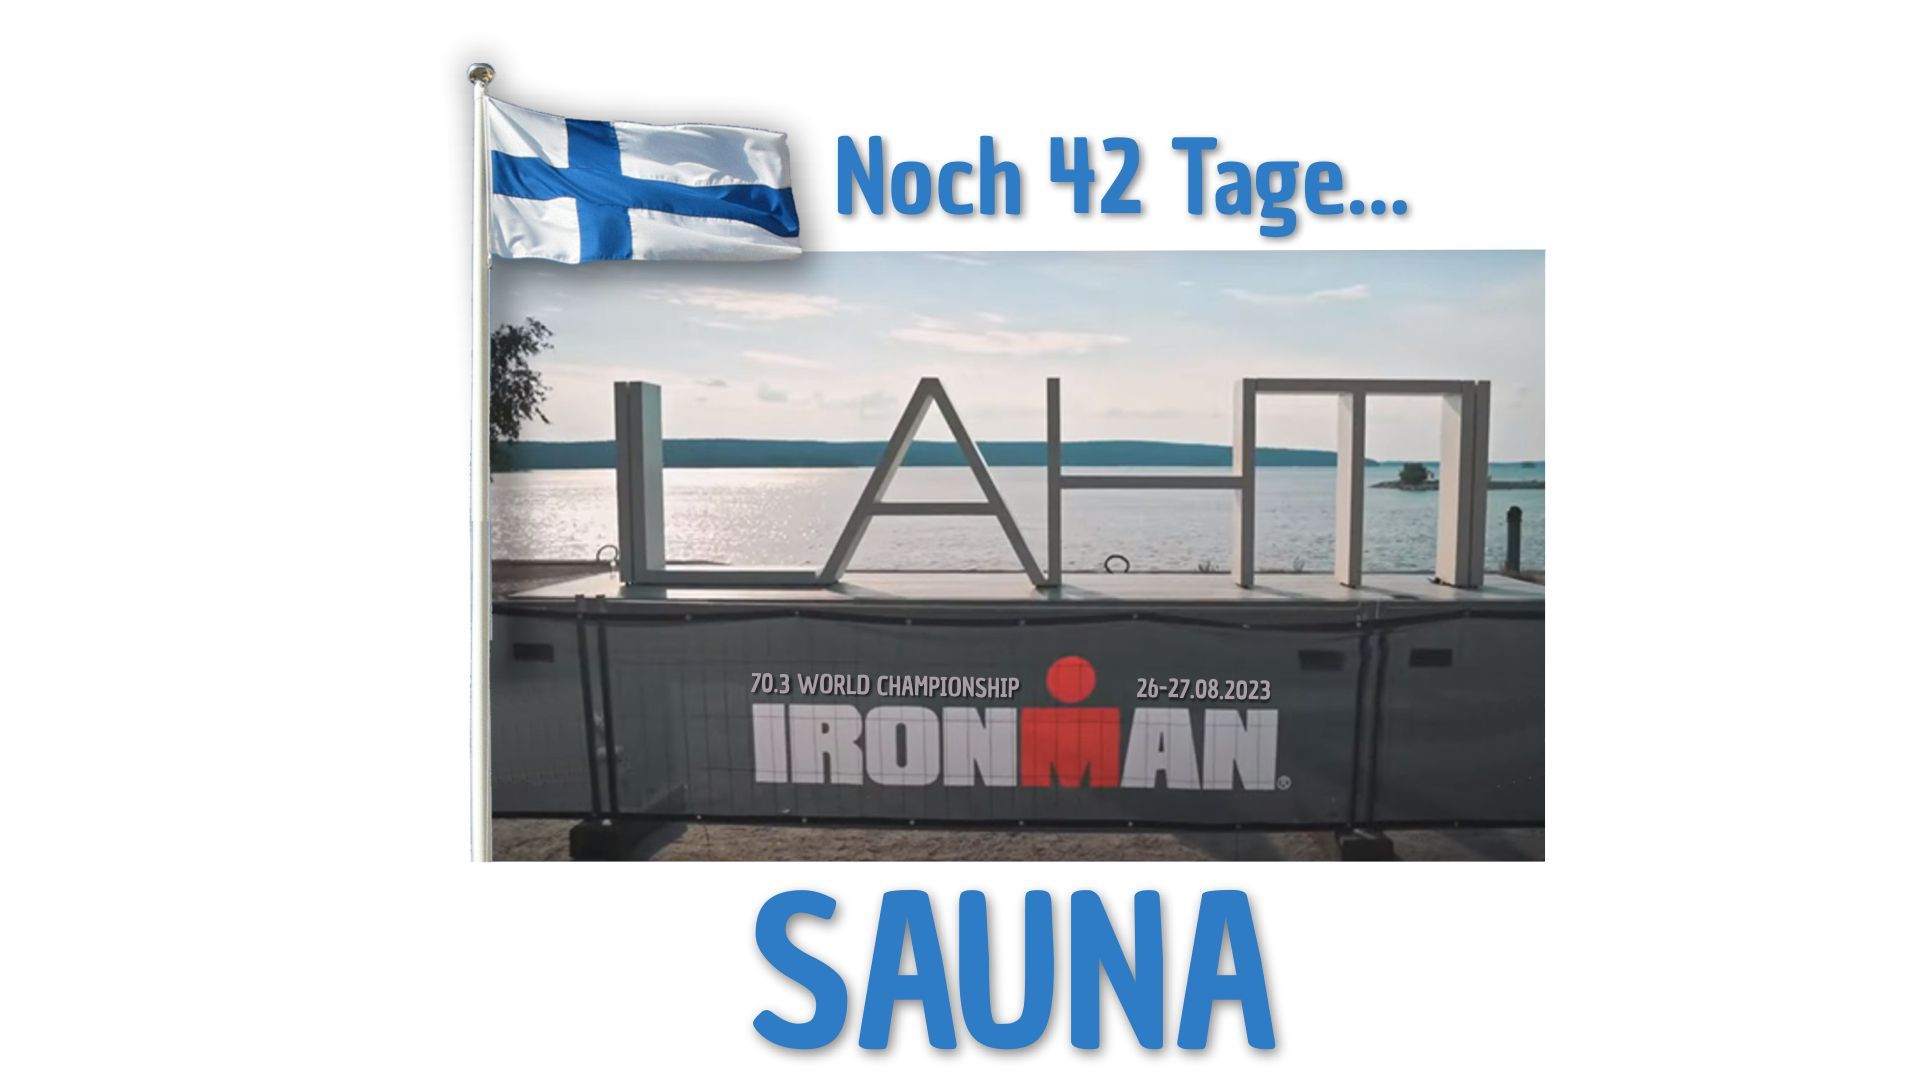 Ironman-Lahti-42-Tage-Noch